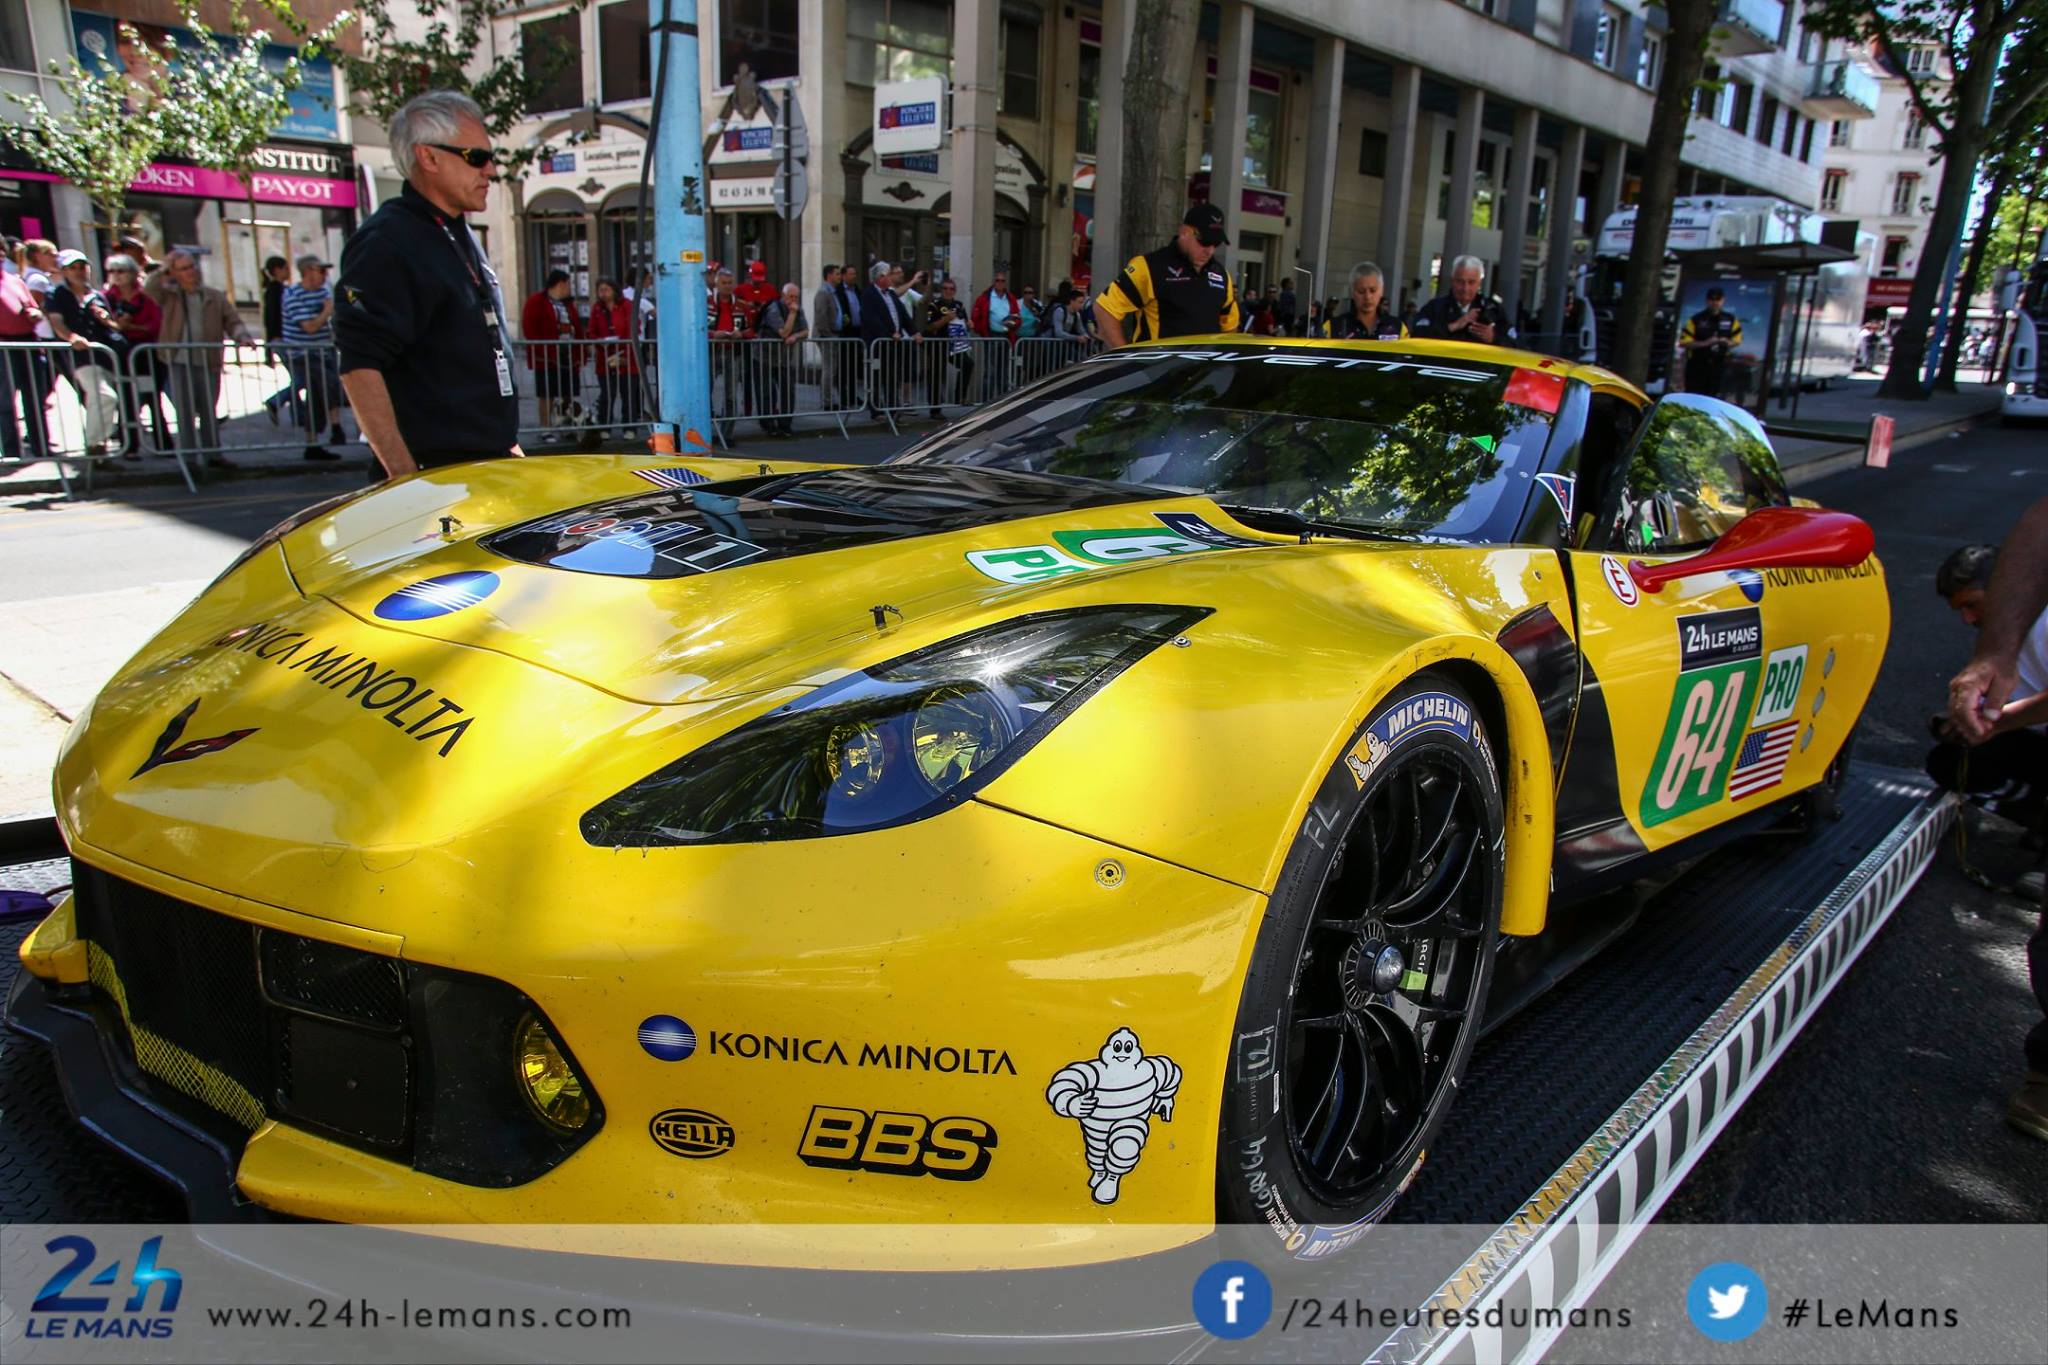 Corvette confiante com retorno da Ford a Le Mans